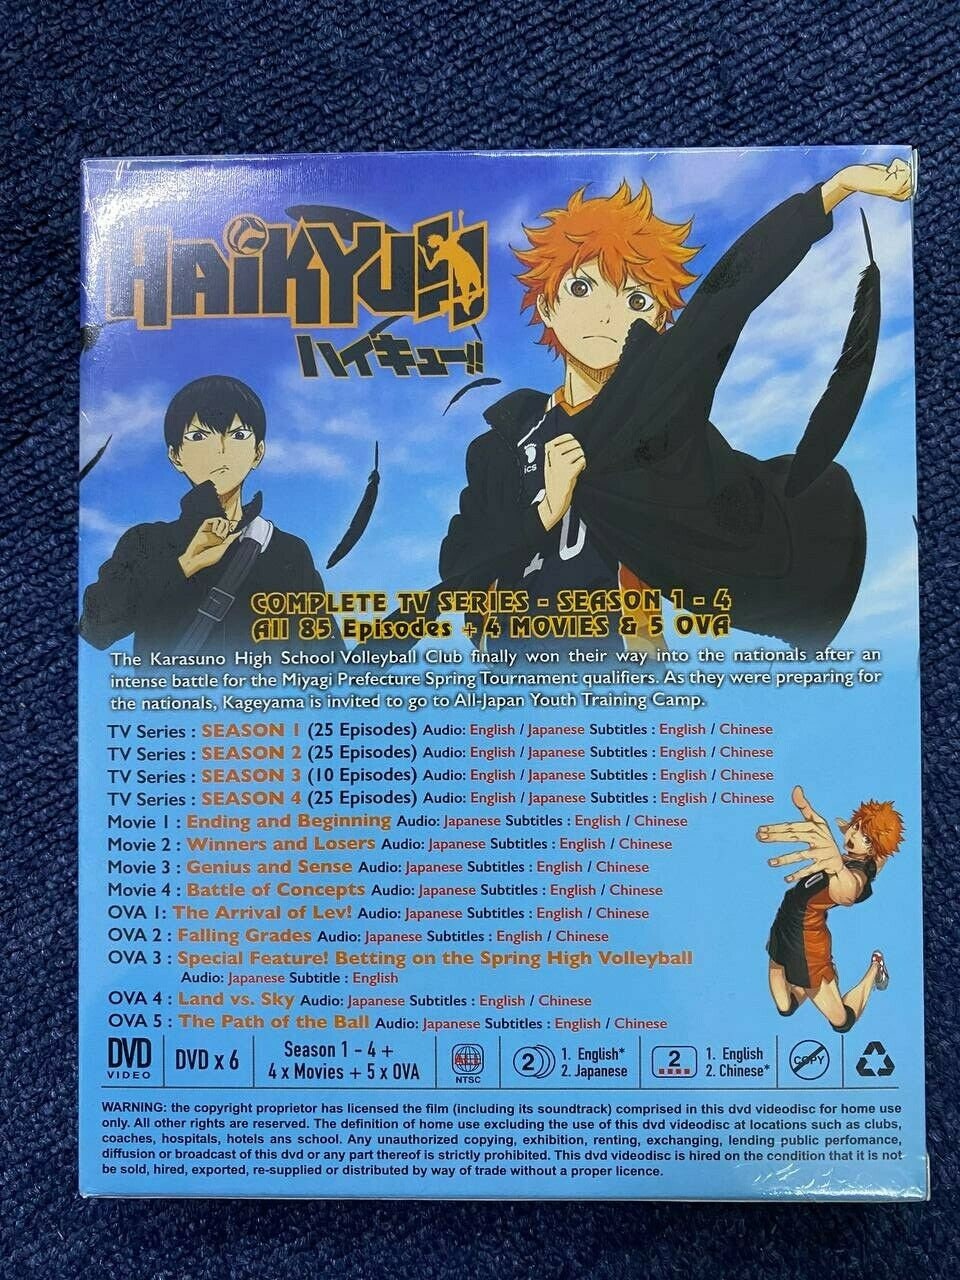 Haikyu Anime Series DVD Box Set season 1-4 English Dubbed 